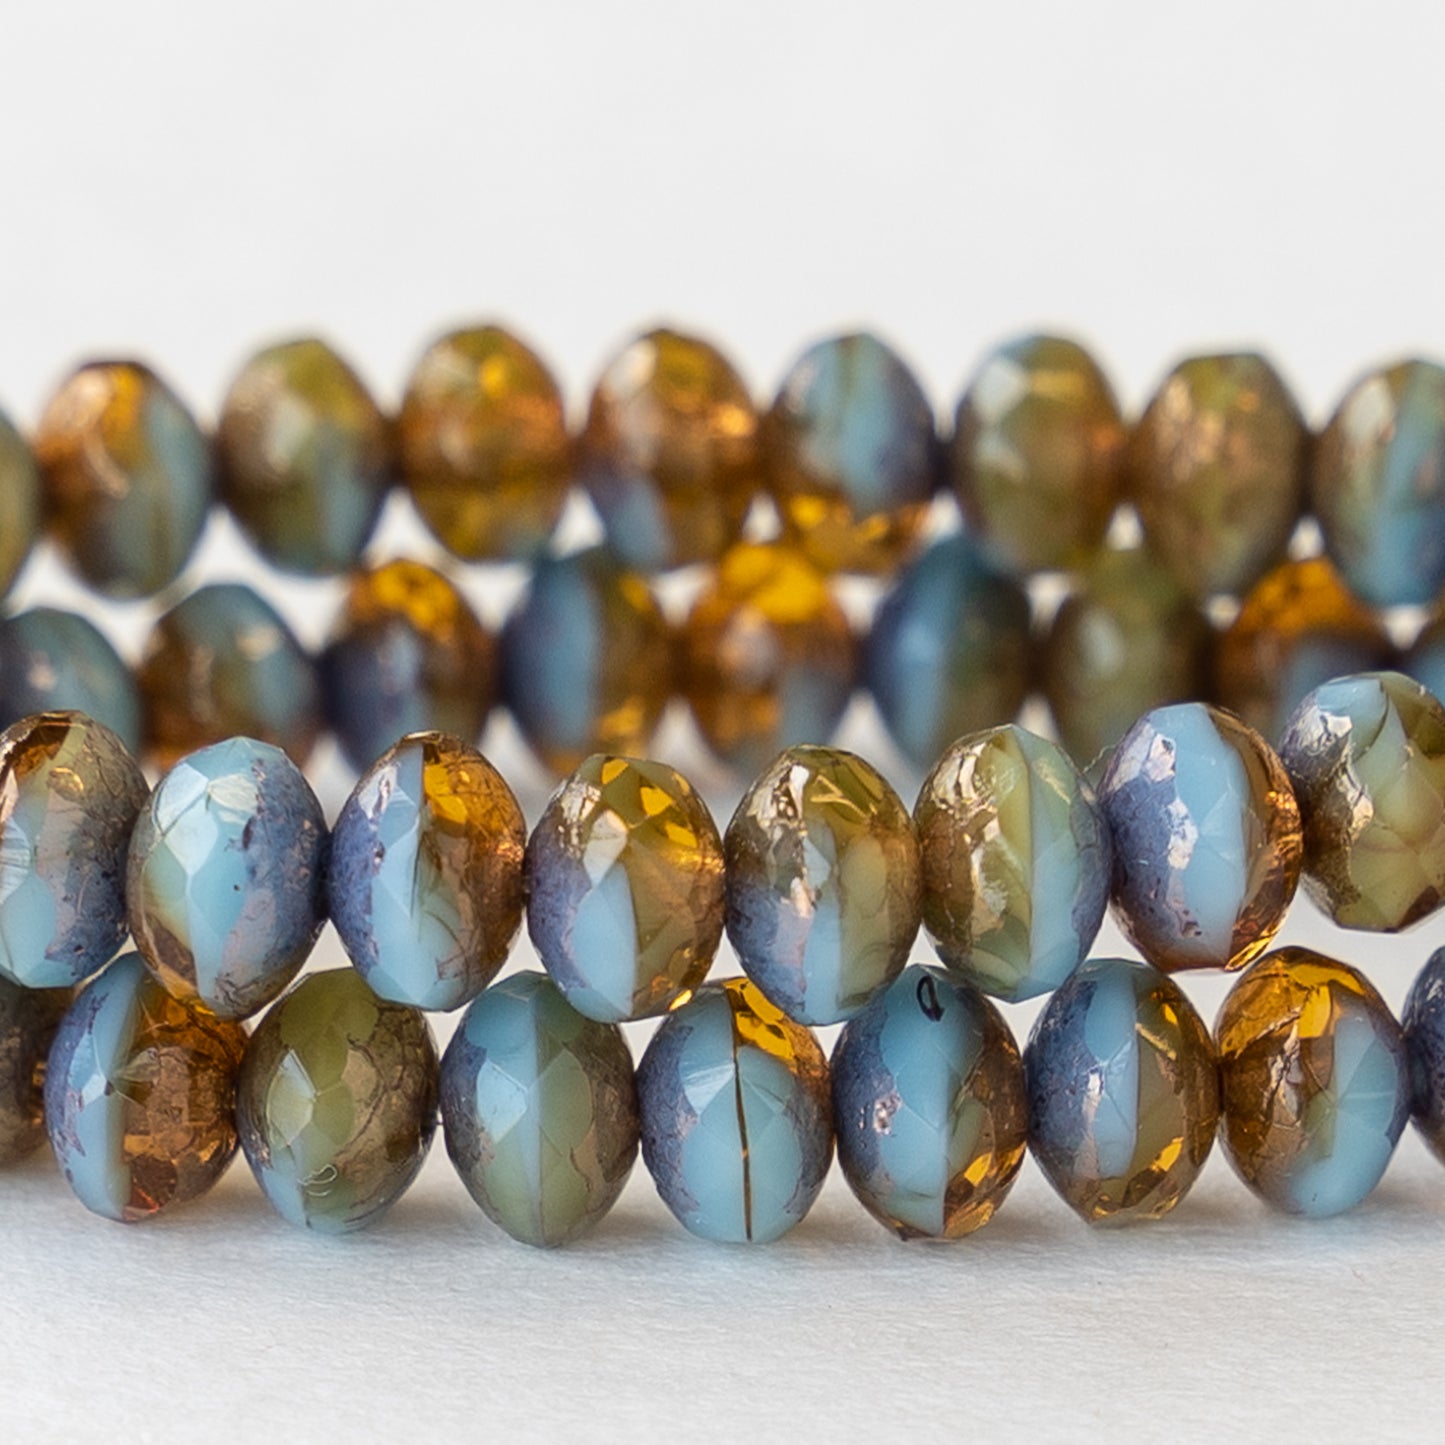 3x5mm Rondelles - Amber  and Aqua Beads - 30 Beads